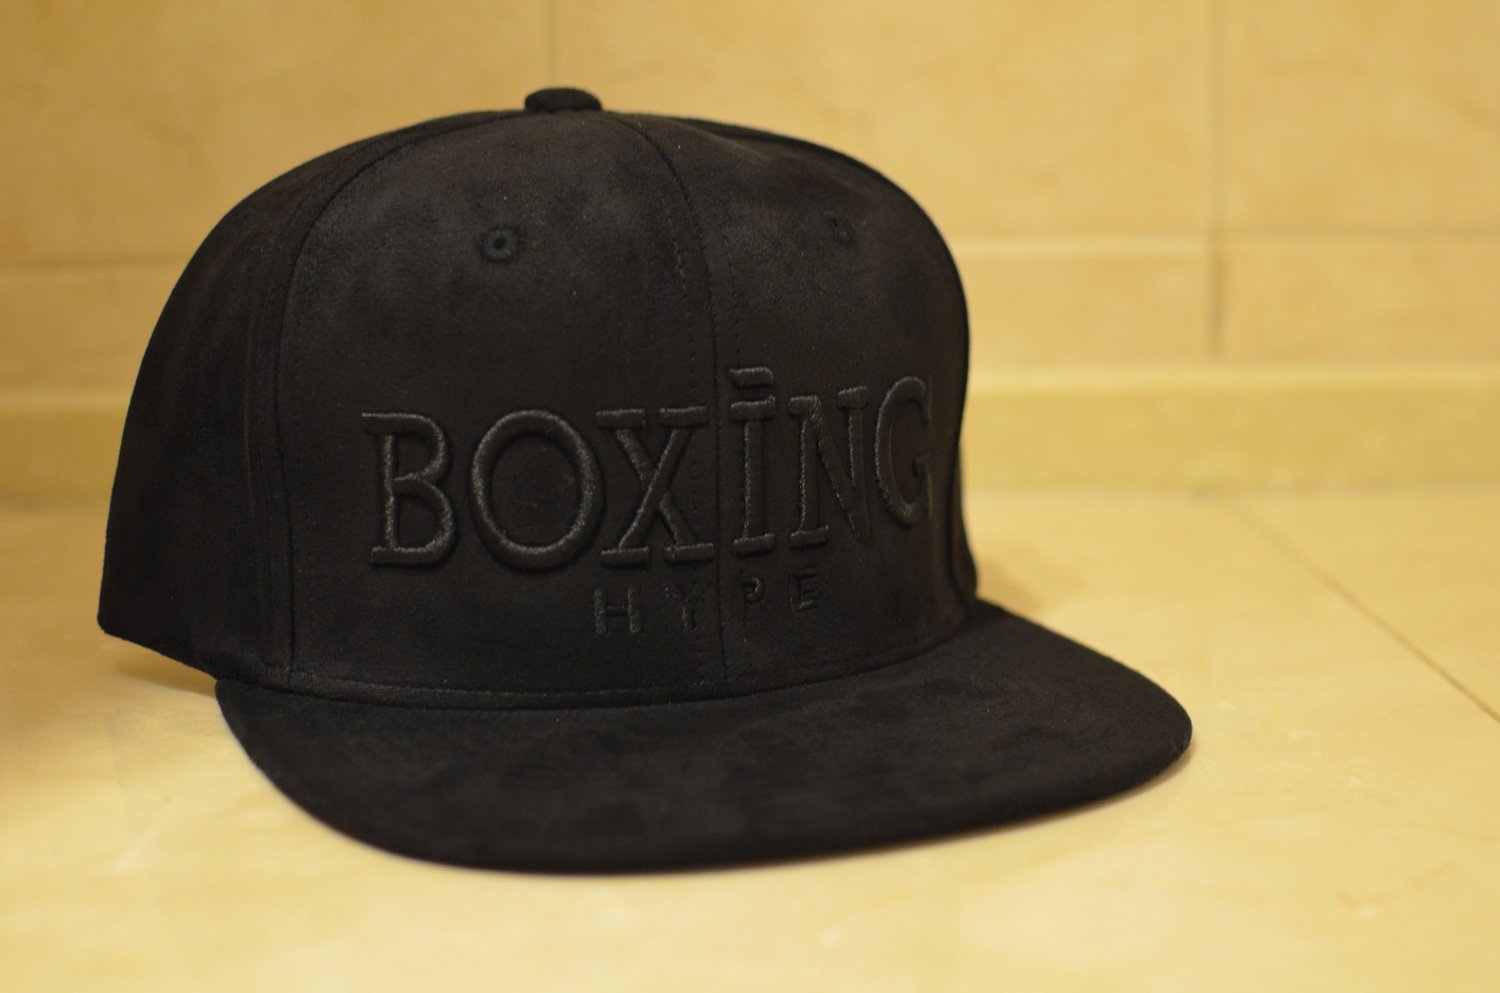 Image of Black on Black BoxingHype Snapbacks